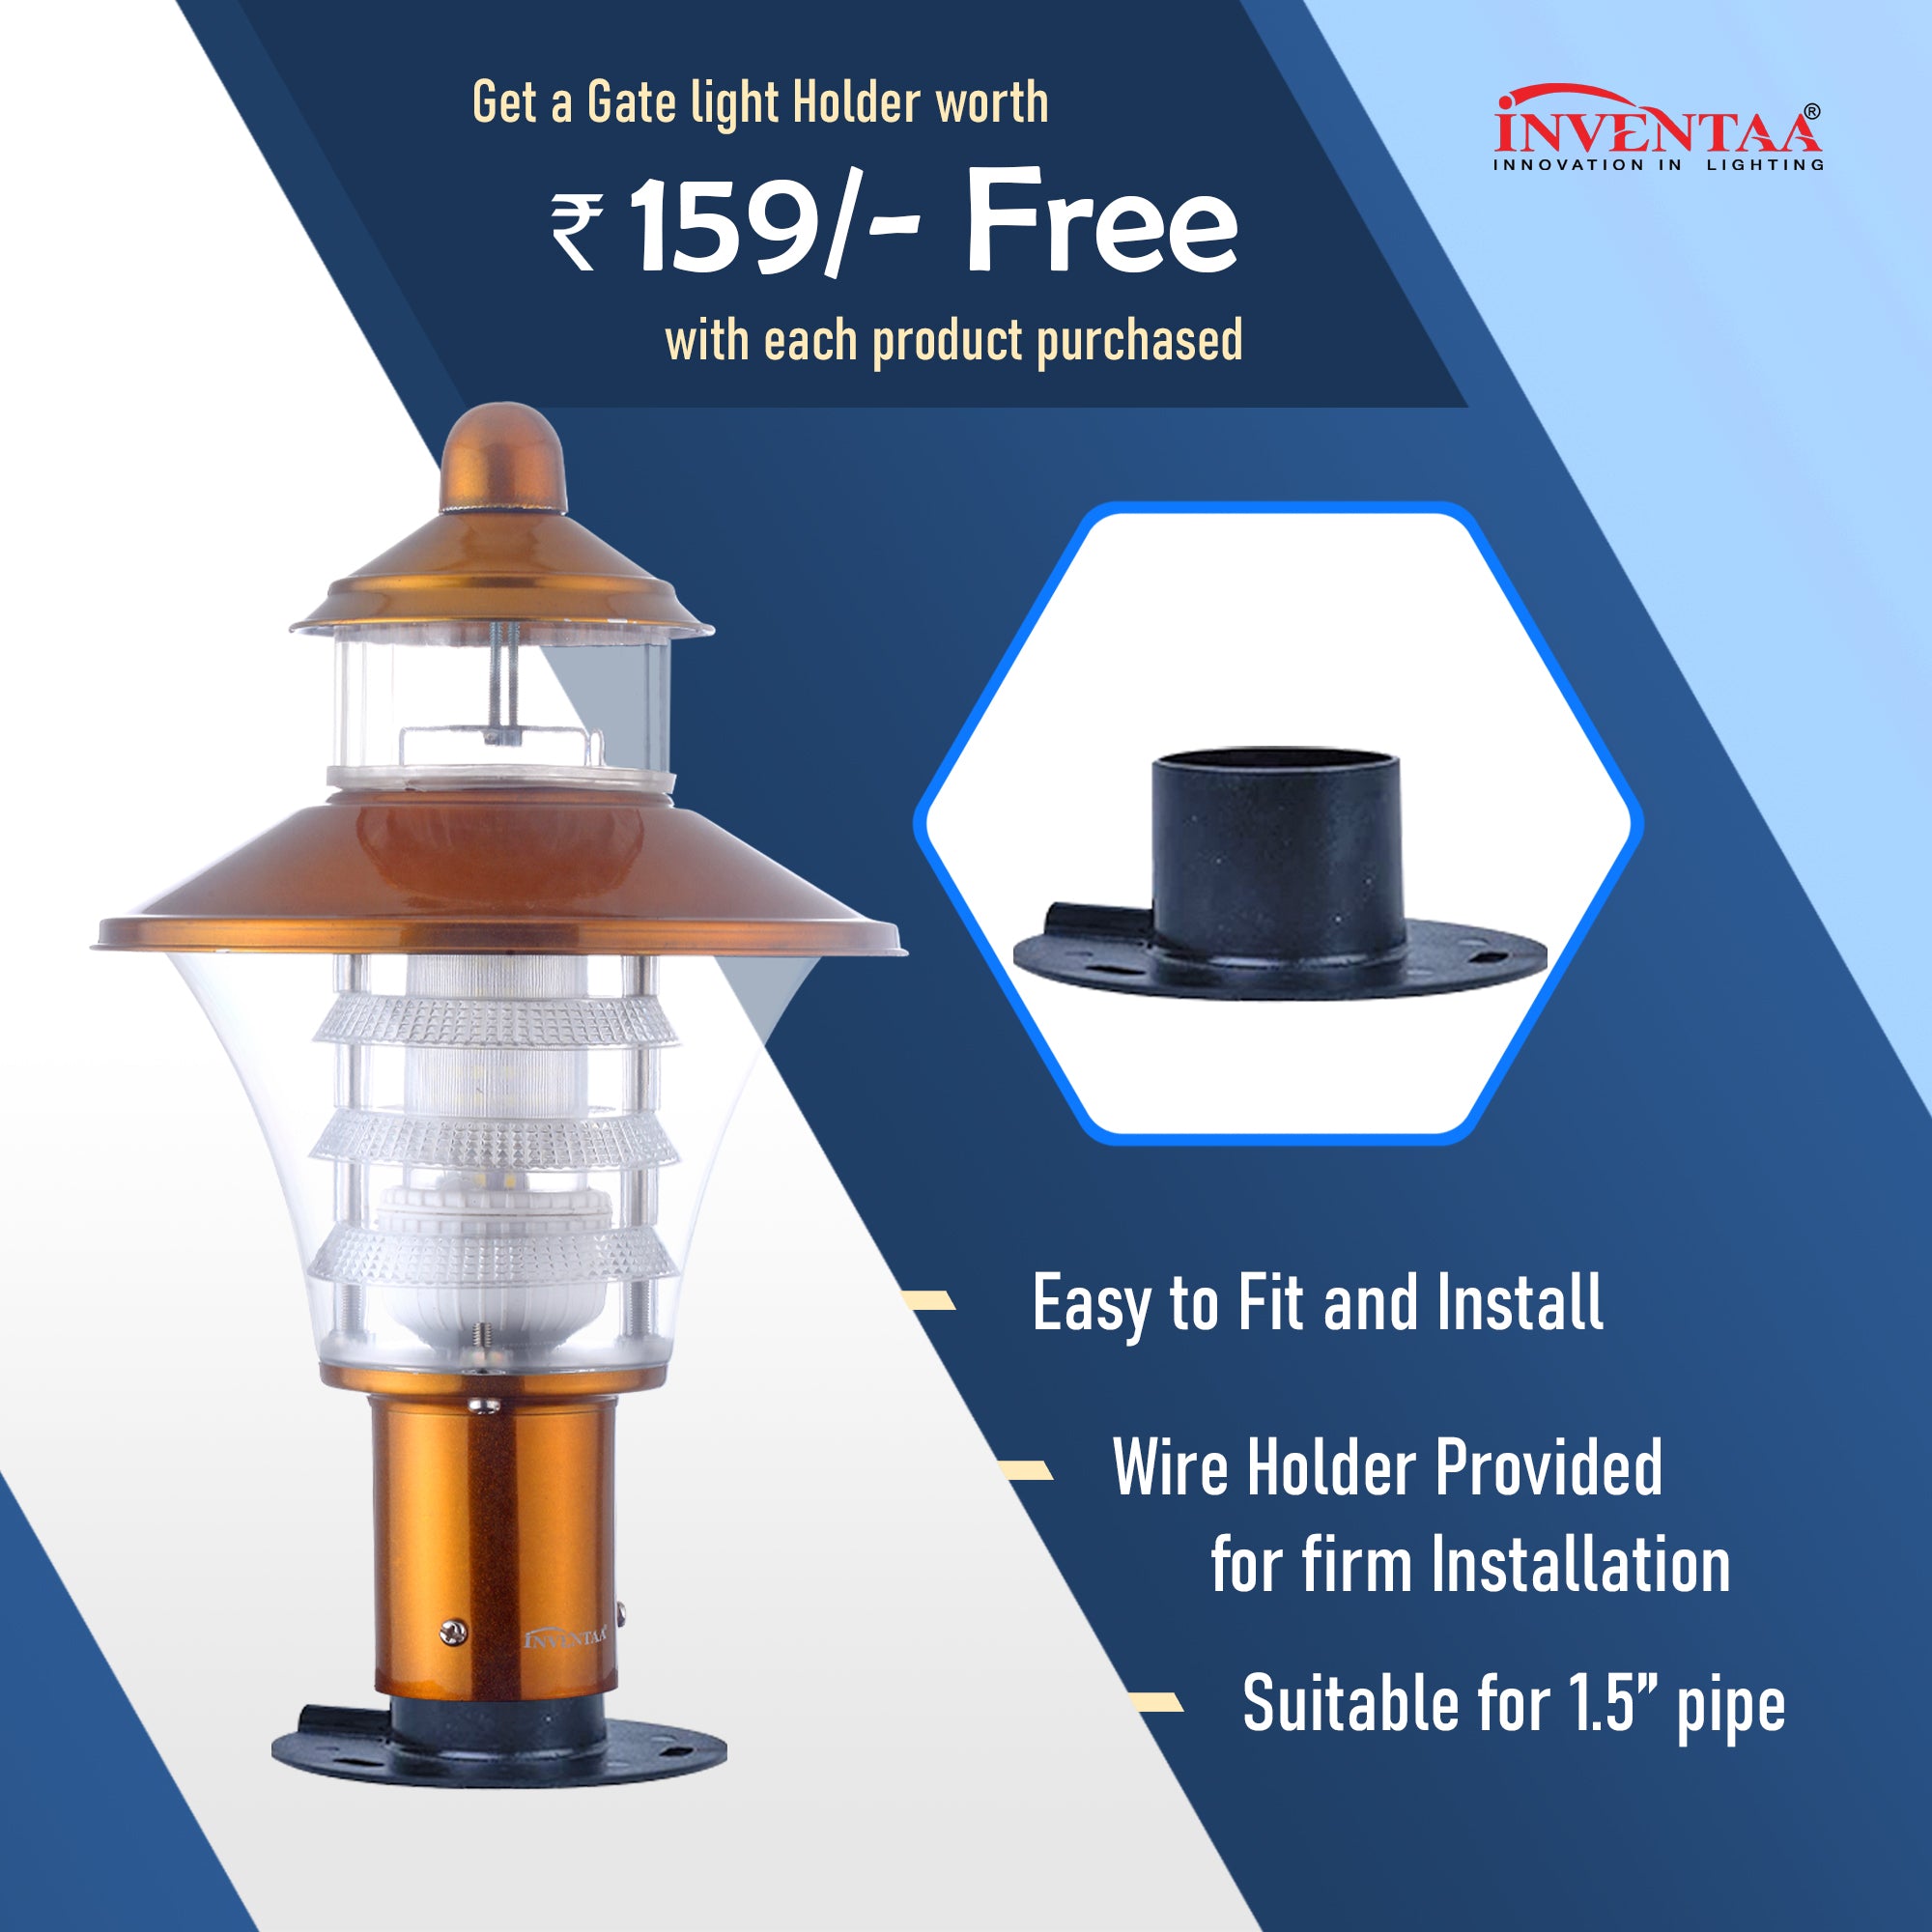 Free LED Gate Light Holder For Viva LH Silver Satin | Best LED Gate Light Model Online at affordable price Online #color_ Silver Satin Trio Luv Clear